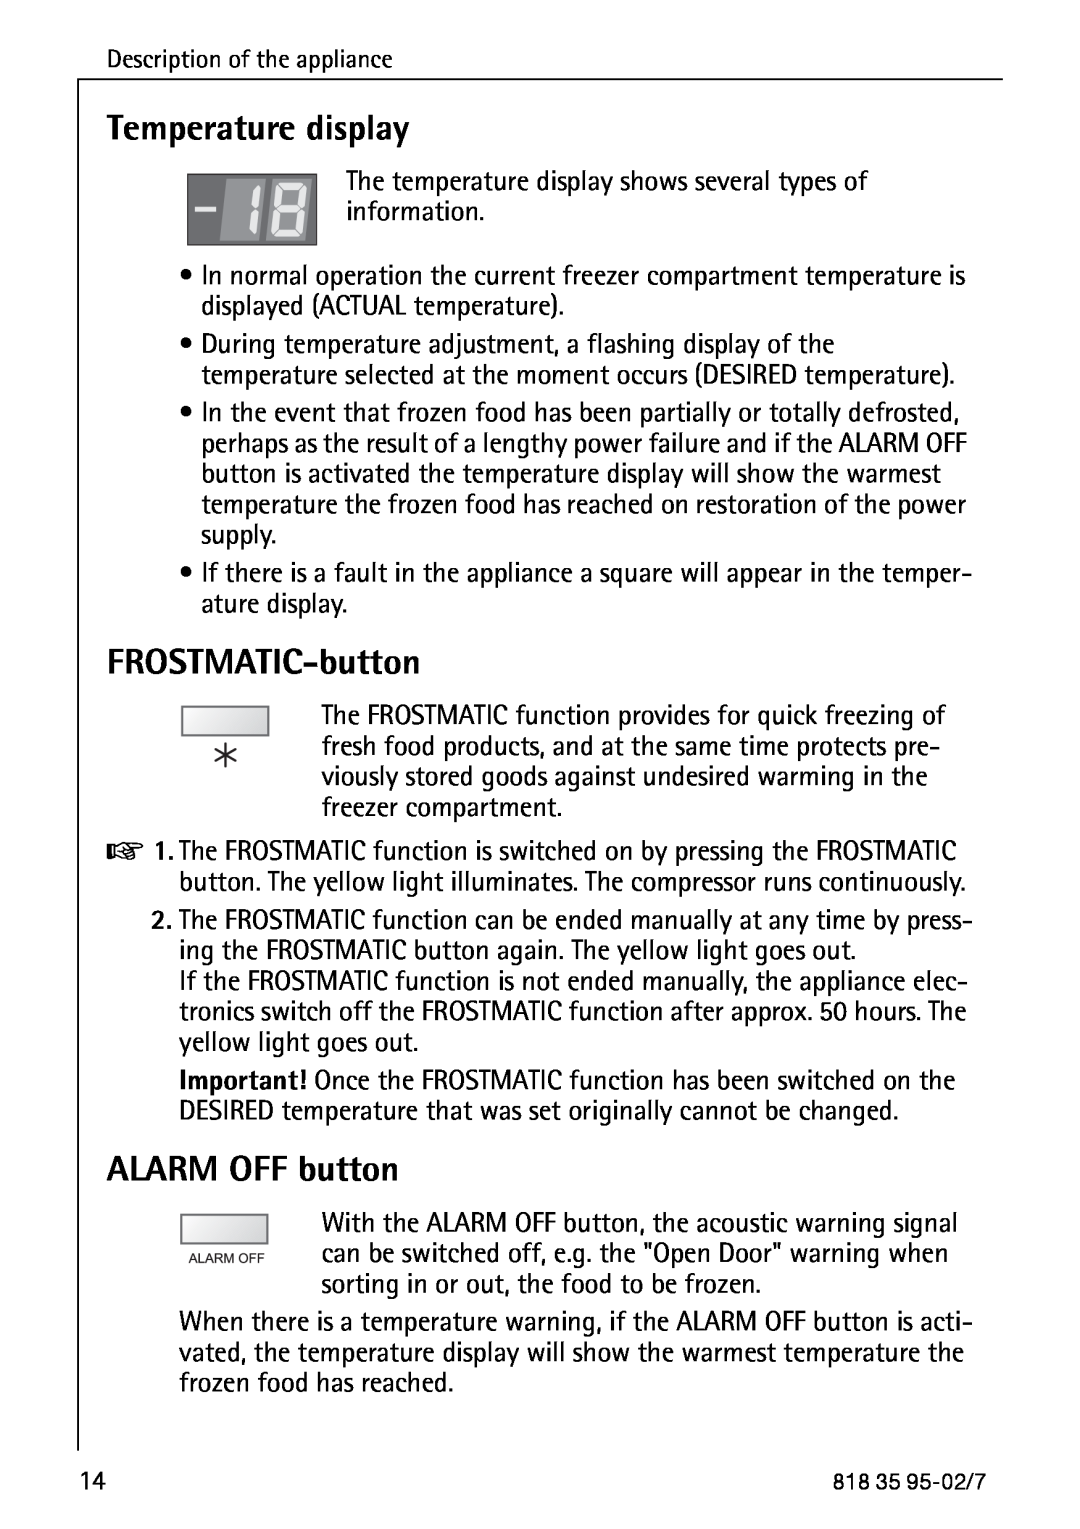 AEG 75248 GA3 manual Temperature display, FROSTMATIC-button, ALARM OFF button 